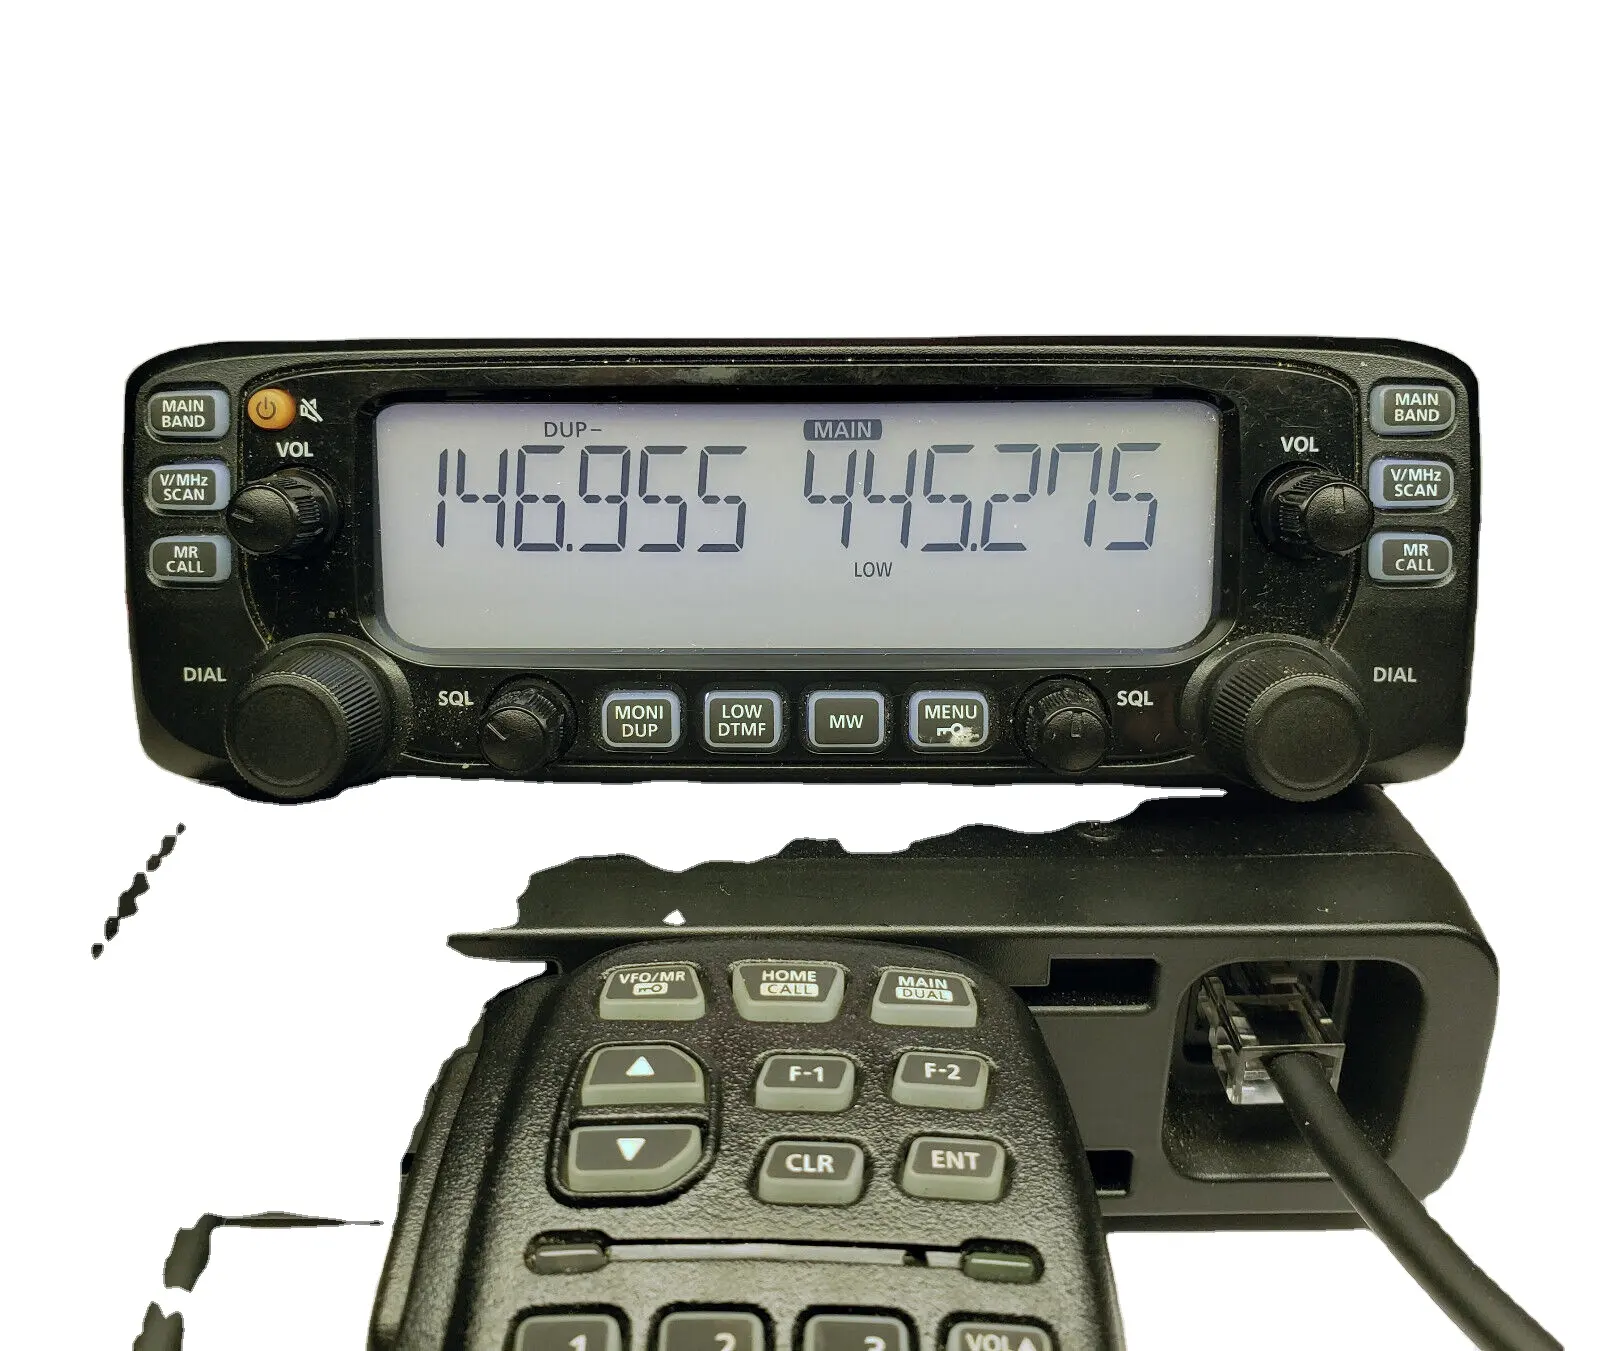 new IC-2730 50W Dual-band Mobile Radio Transceiver VHF/UHF vehicle walkie talkie